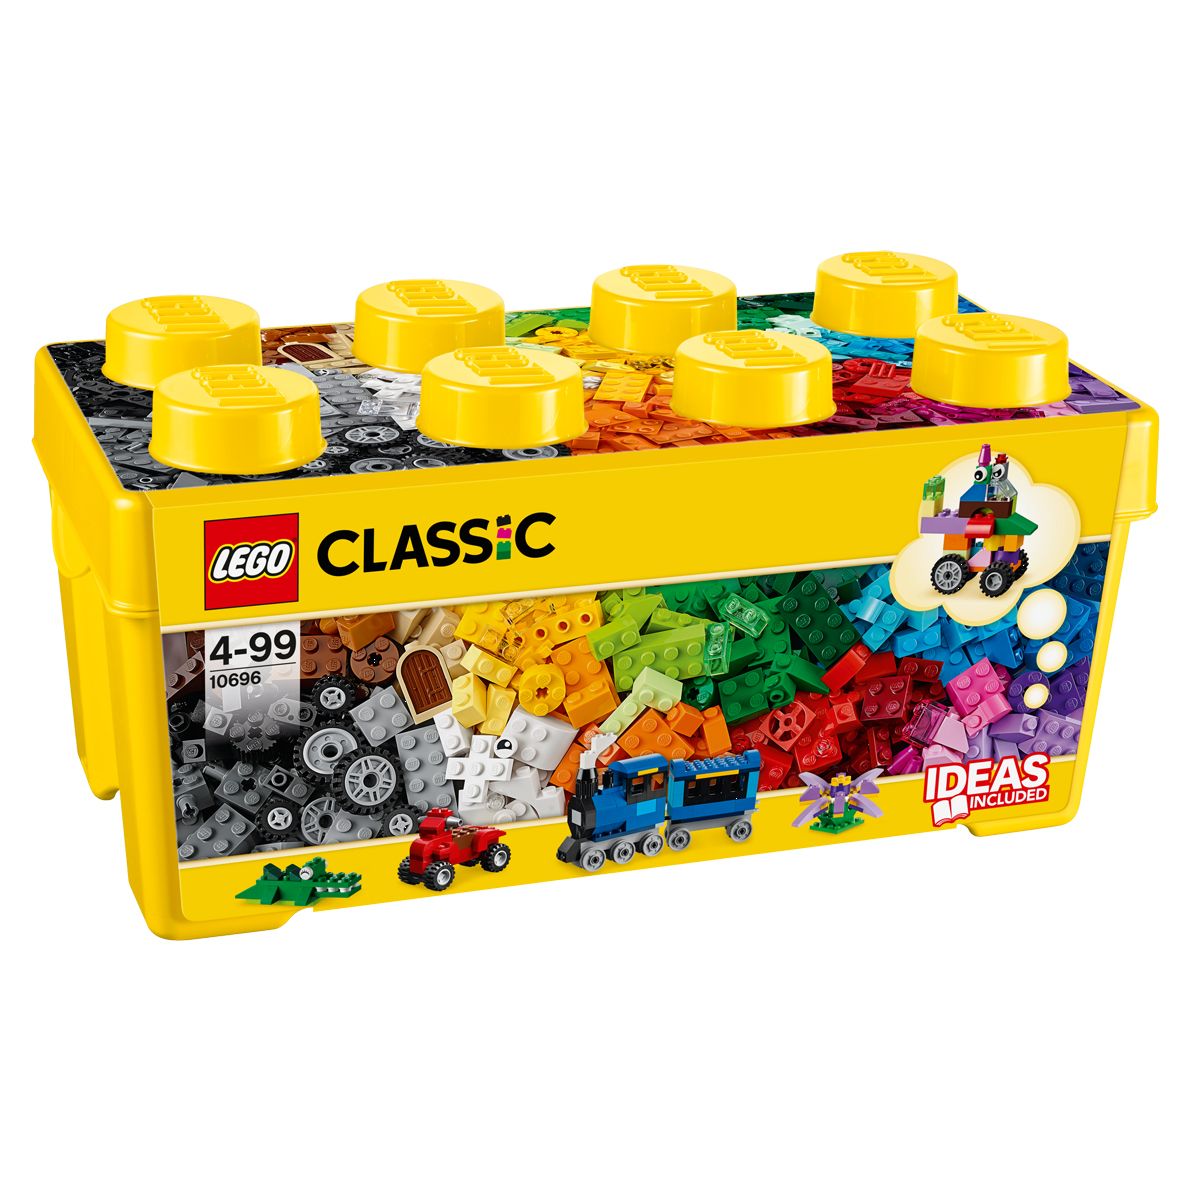 LEGO Grande boîte de briques lego - Jeu d'Enfant ®